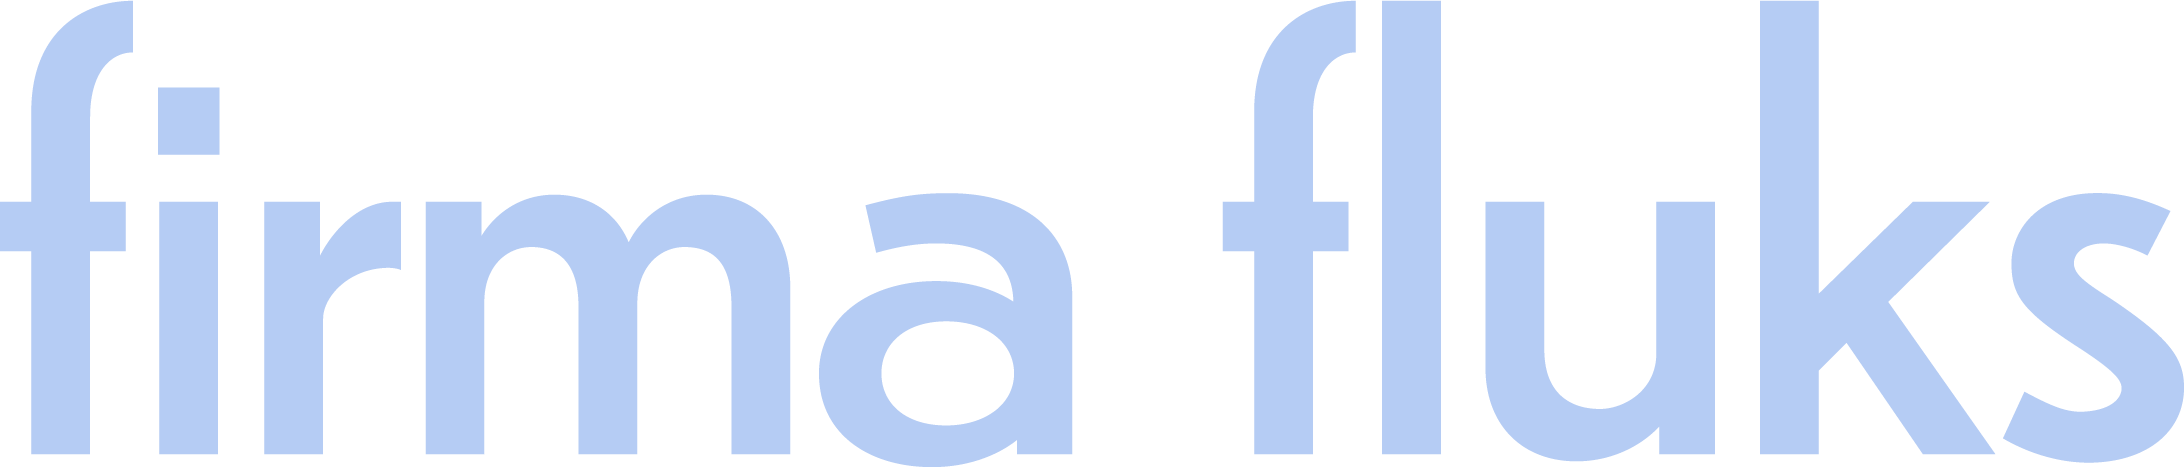 logo-lavender